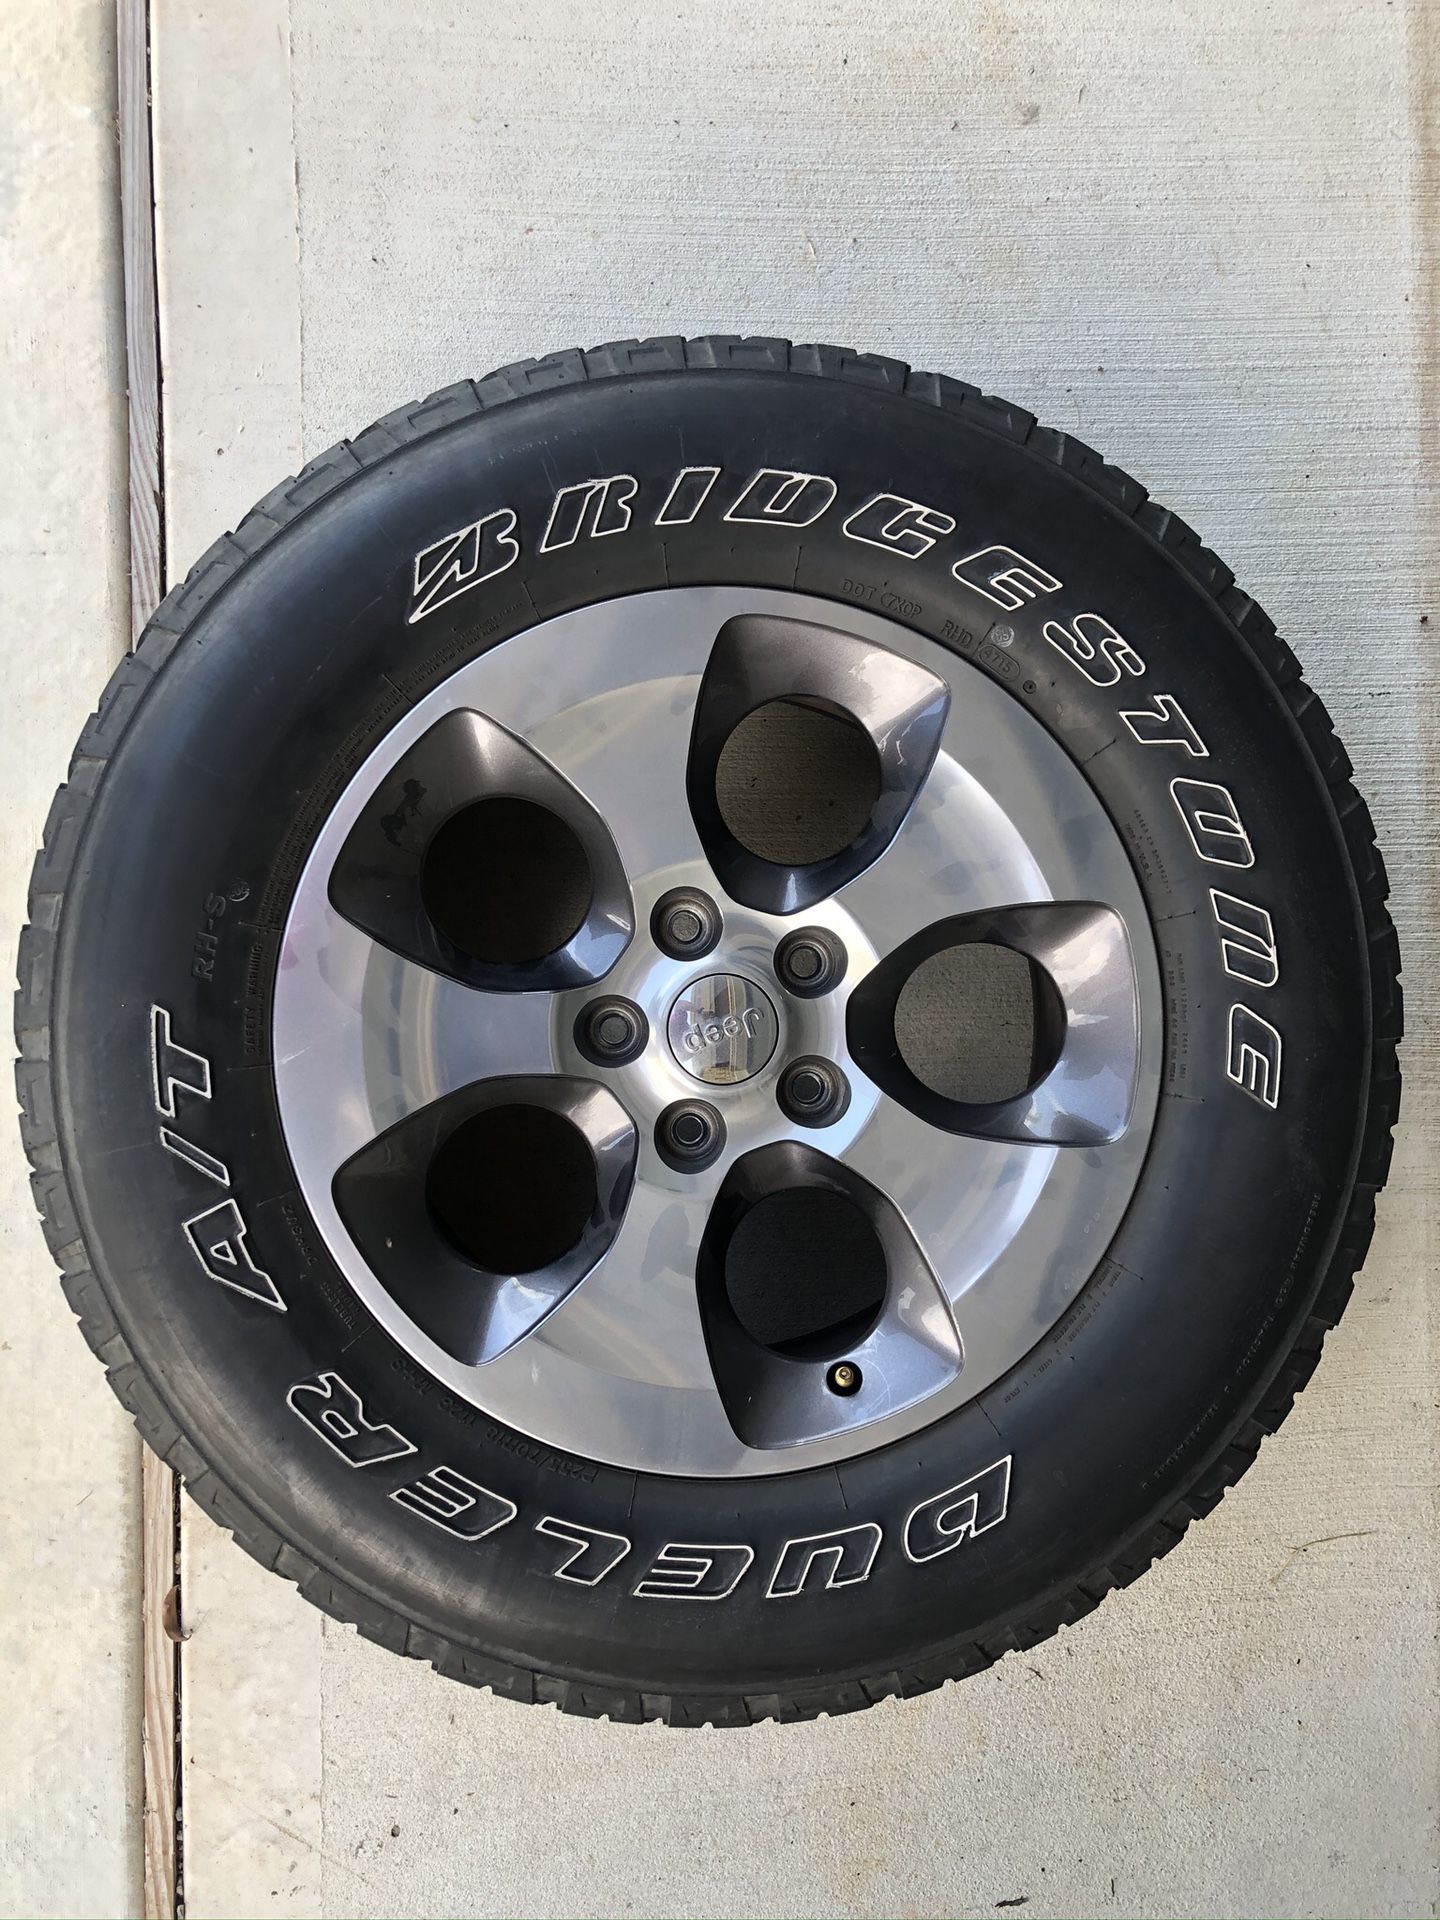 2016 Jeep Wrangler Sahara 18” Wheels and tires